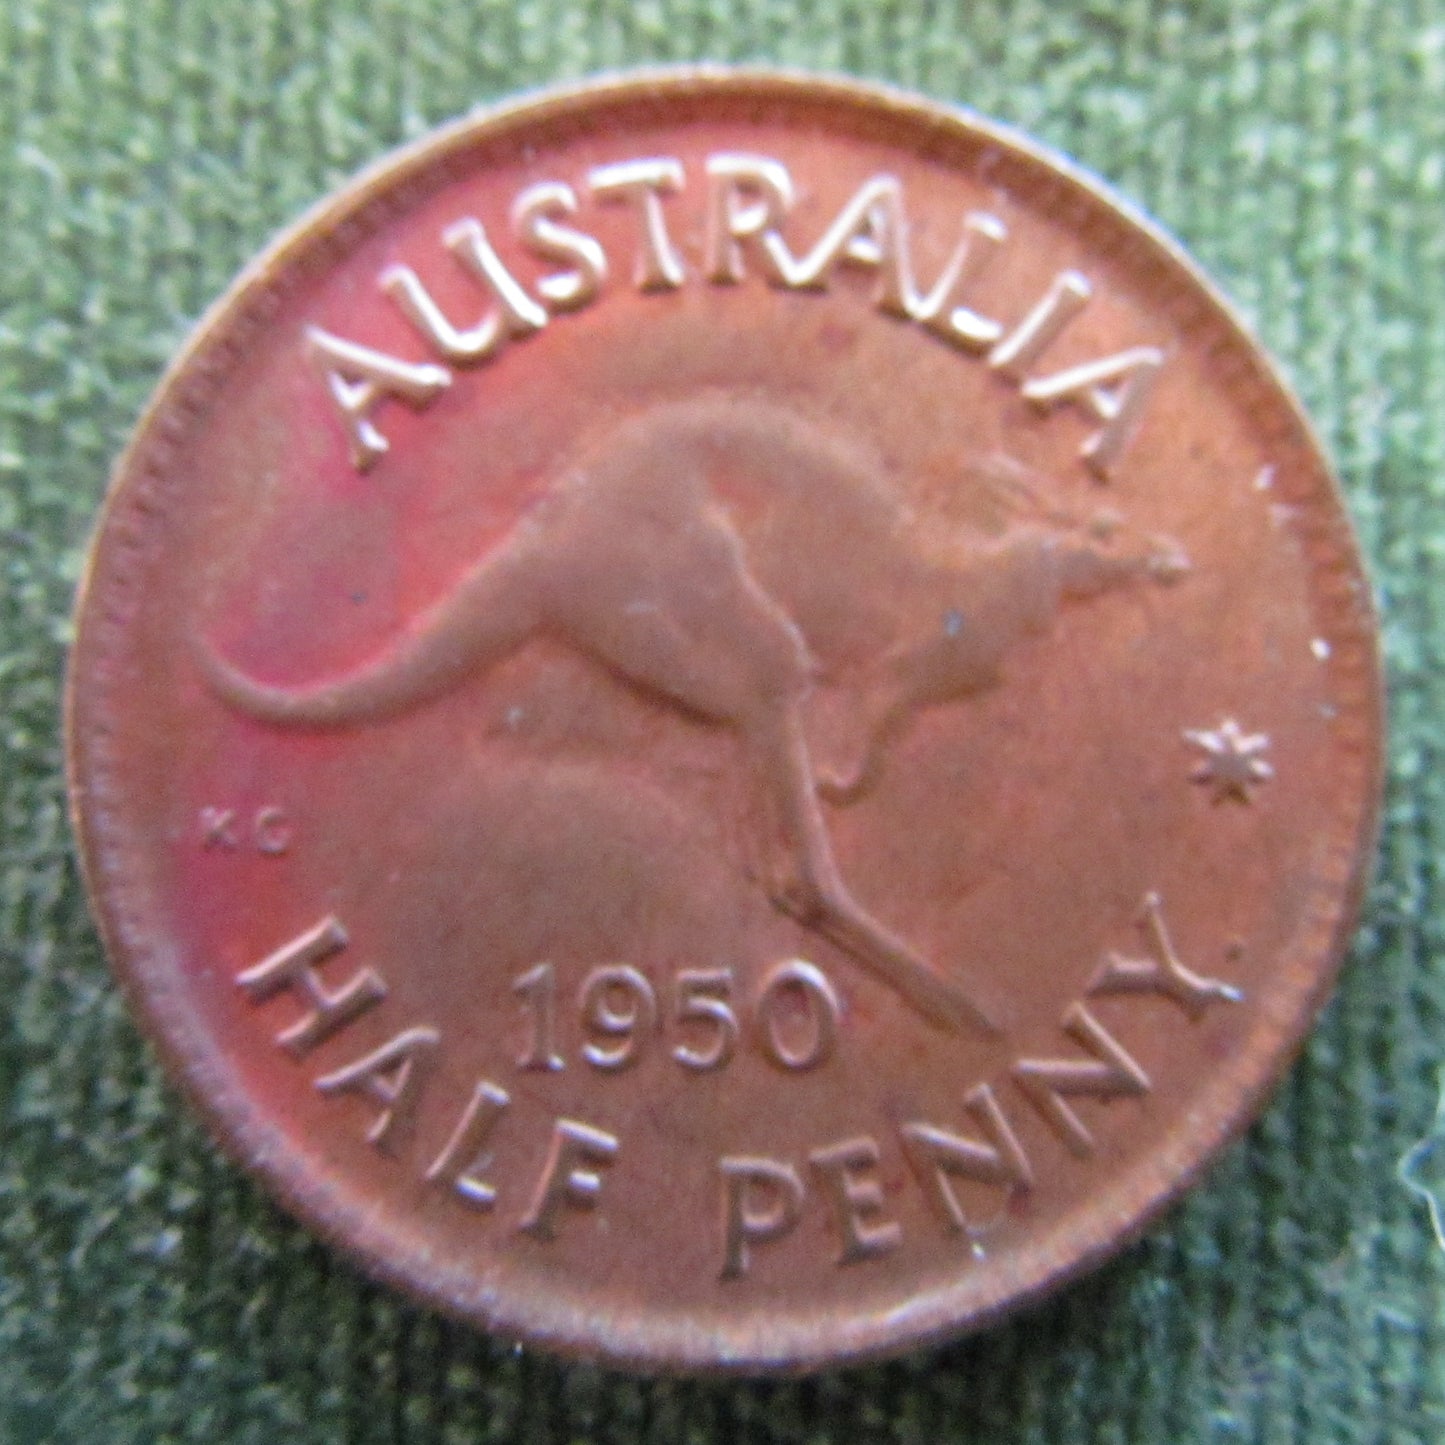 Australian 1950Y. 1/2d Half Penny King George VI Coin - Variety Rim Cud